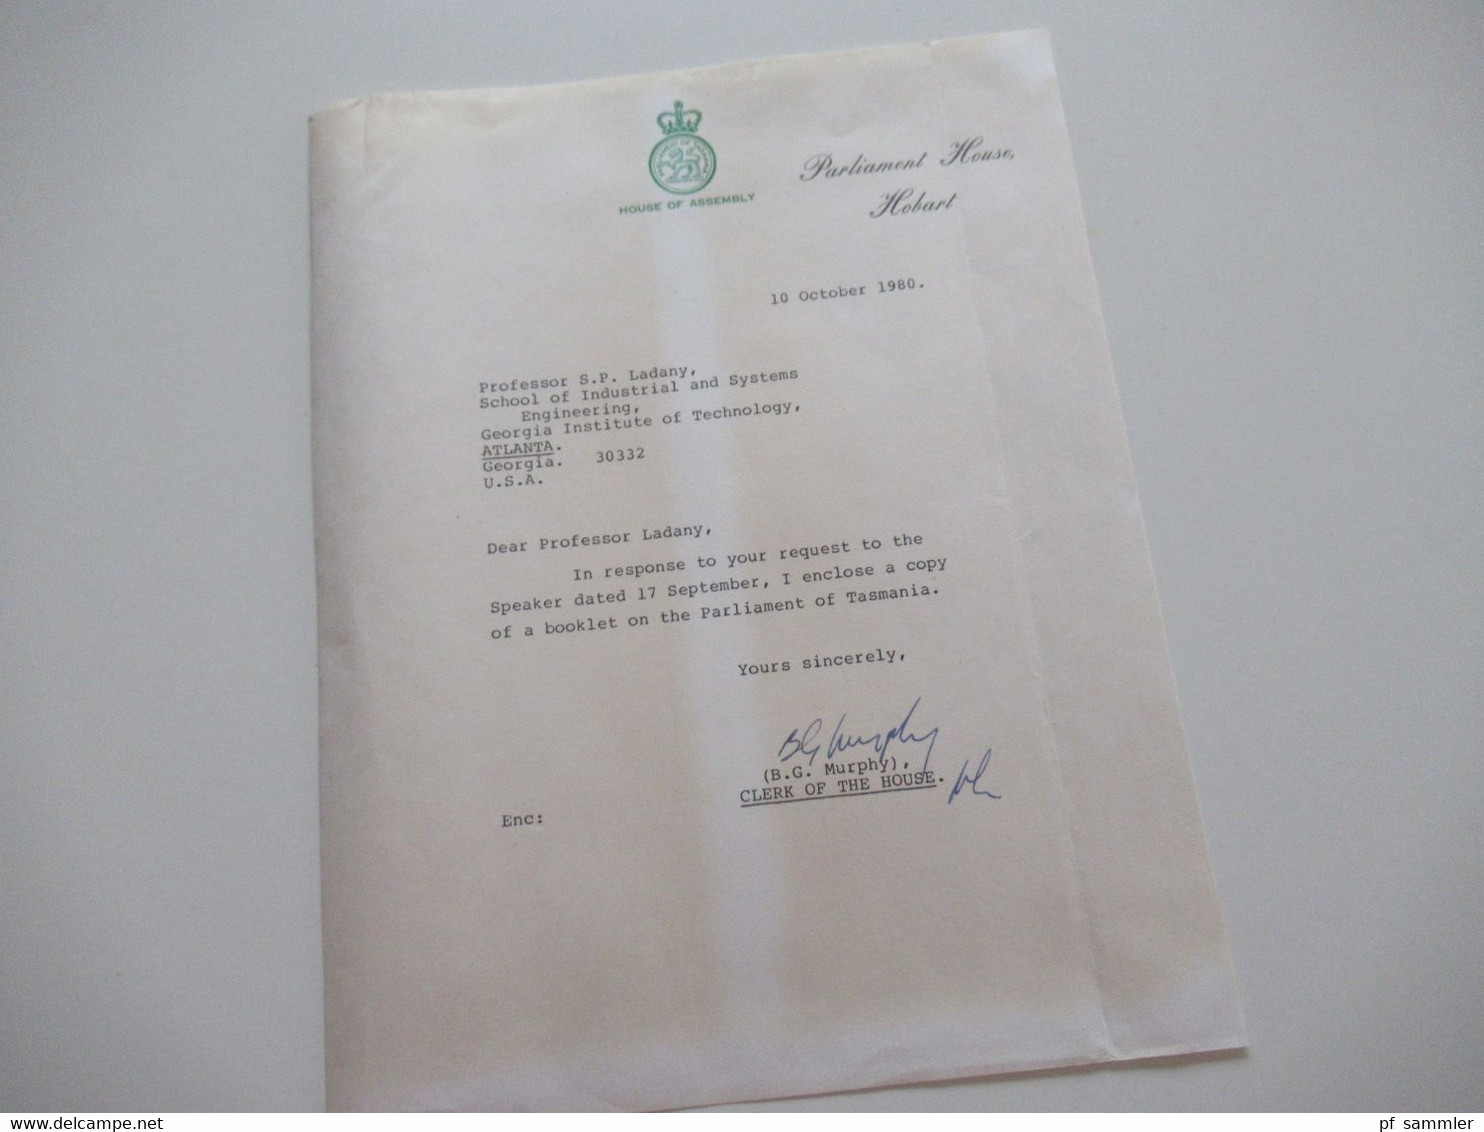 1980 Air Mail nach Atlanta Umschlag OHMS Printed Matter House of Assembly Papers Tasmania Inhalt Parliament House Hobart